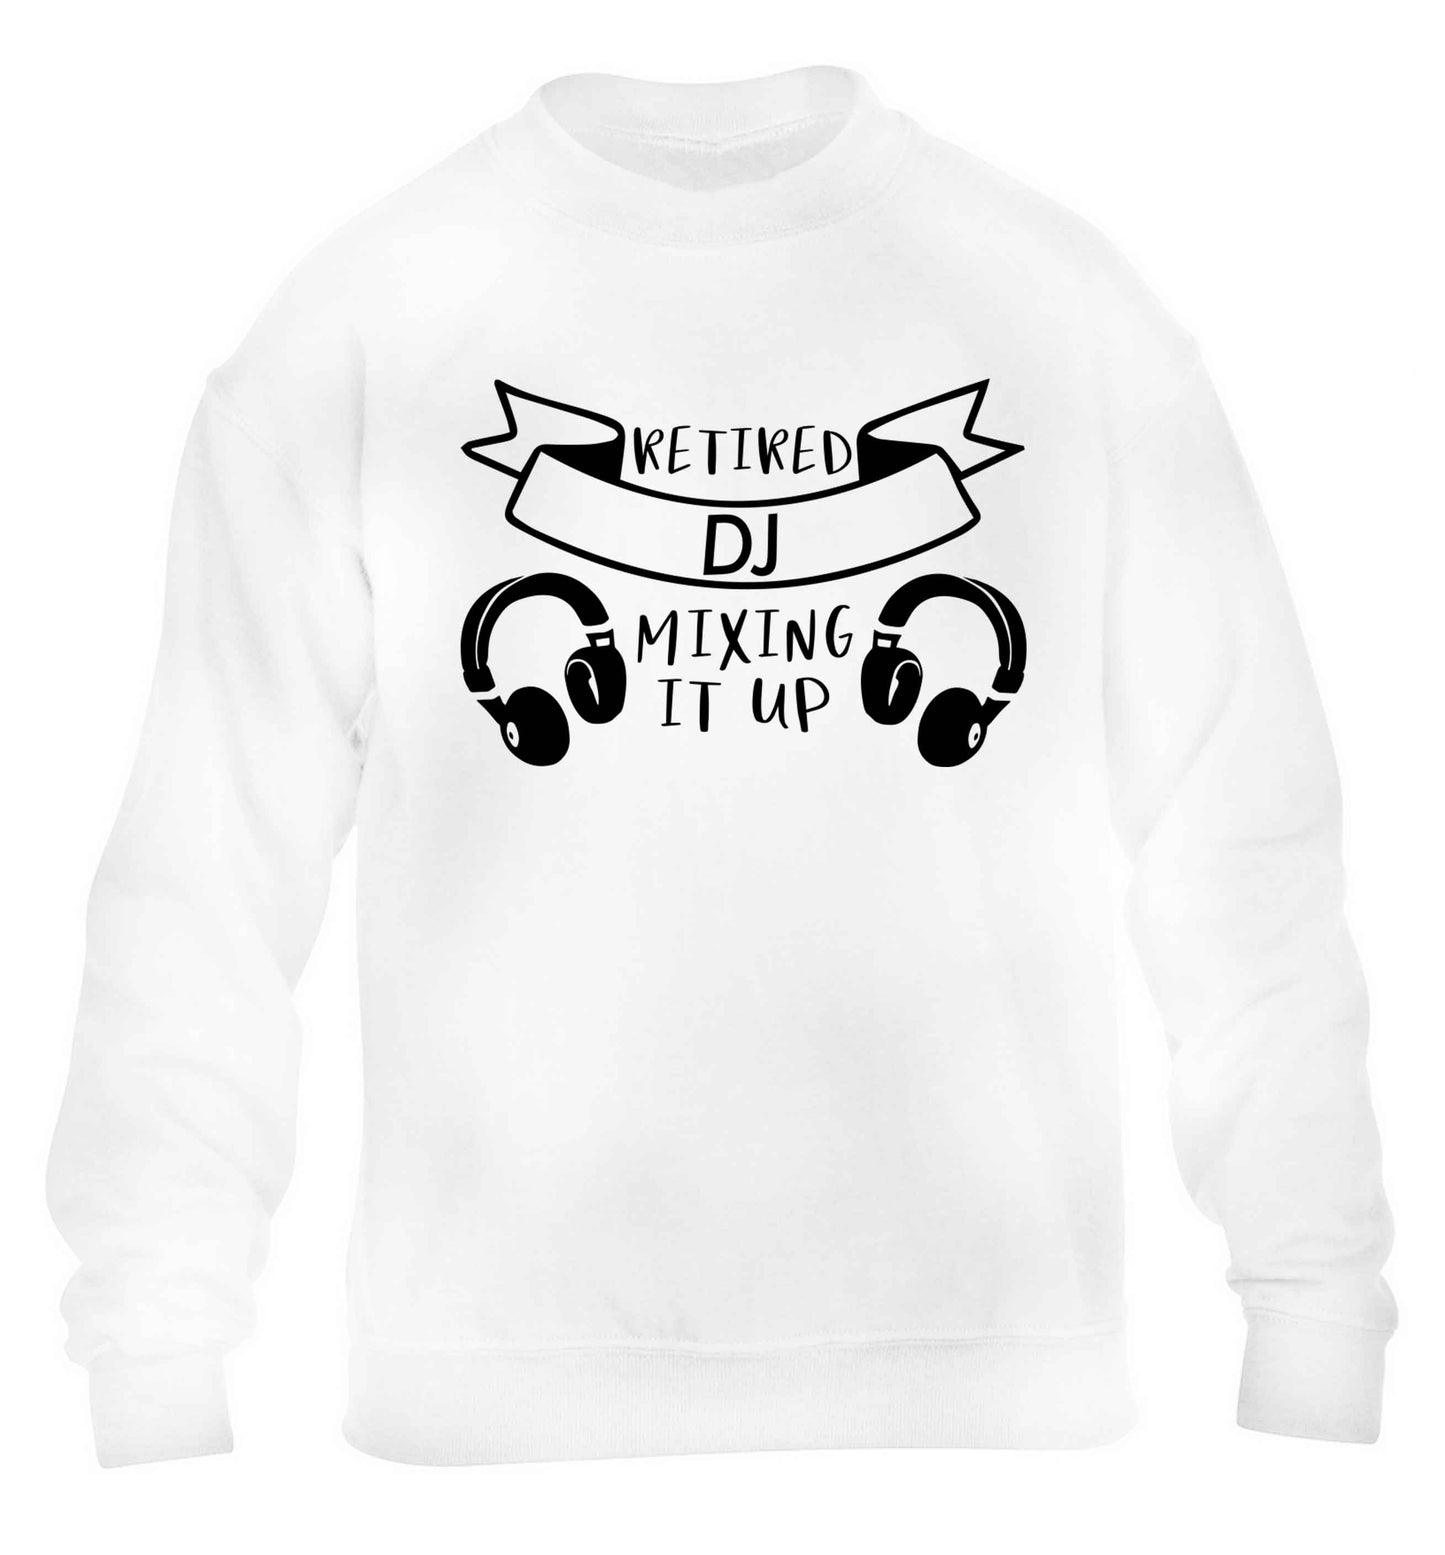 Retired DJ mixing it up children's white sweater 12-13 Years